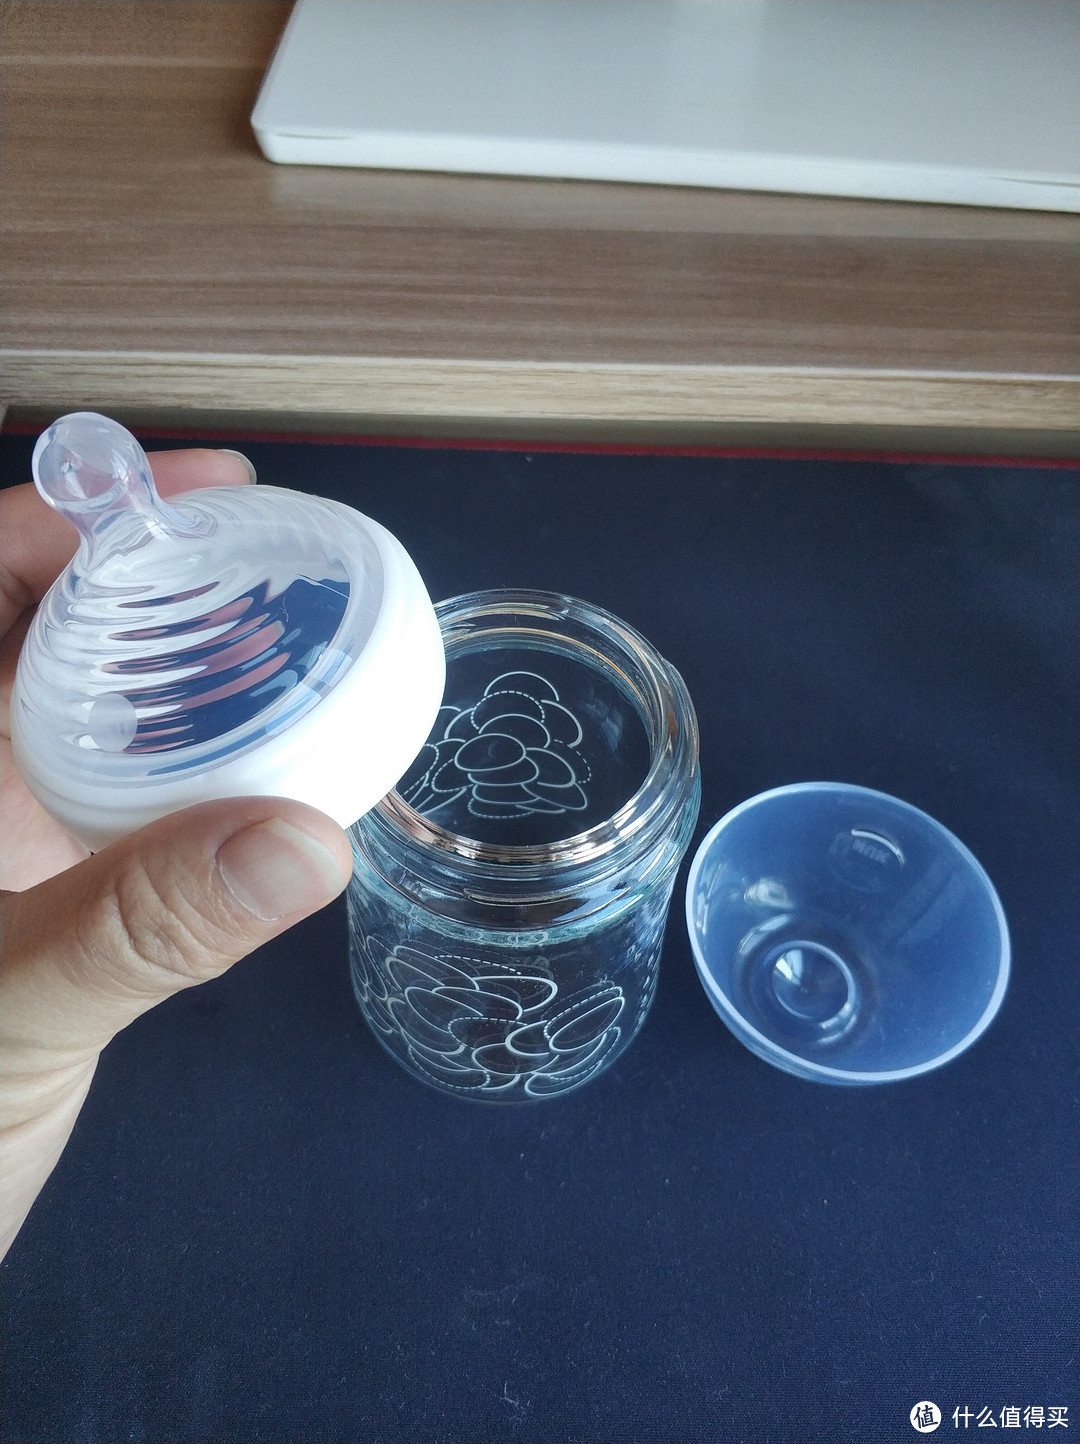 NUK Nature Sense 玻璃奶瓶套装---离开妈妈后的第一个“母乳”